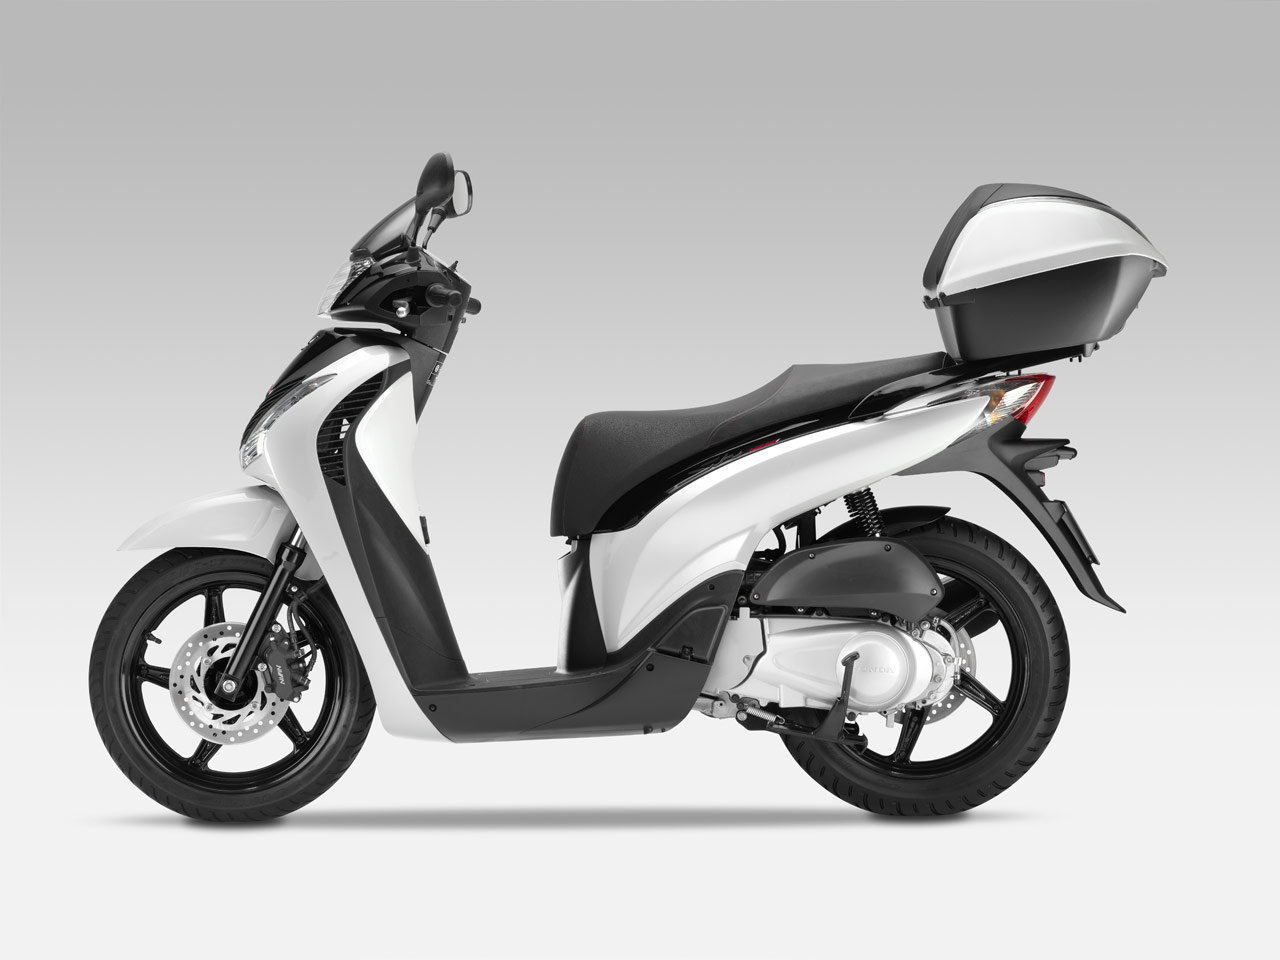 Listino Honda SH150i Sporty Scooter 150-300 - image 14710_honda-sh150isporty on https://moto.motori.net